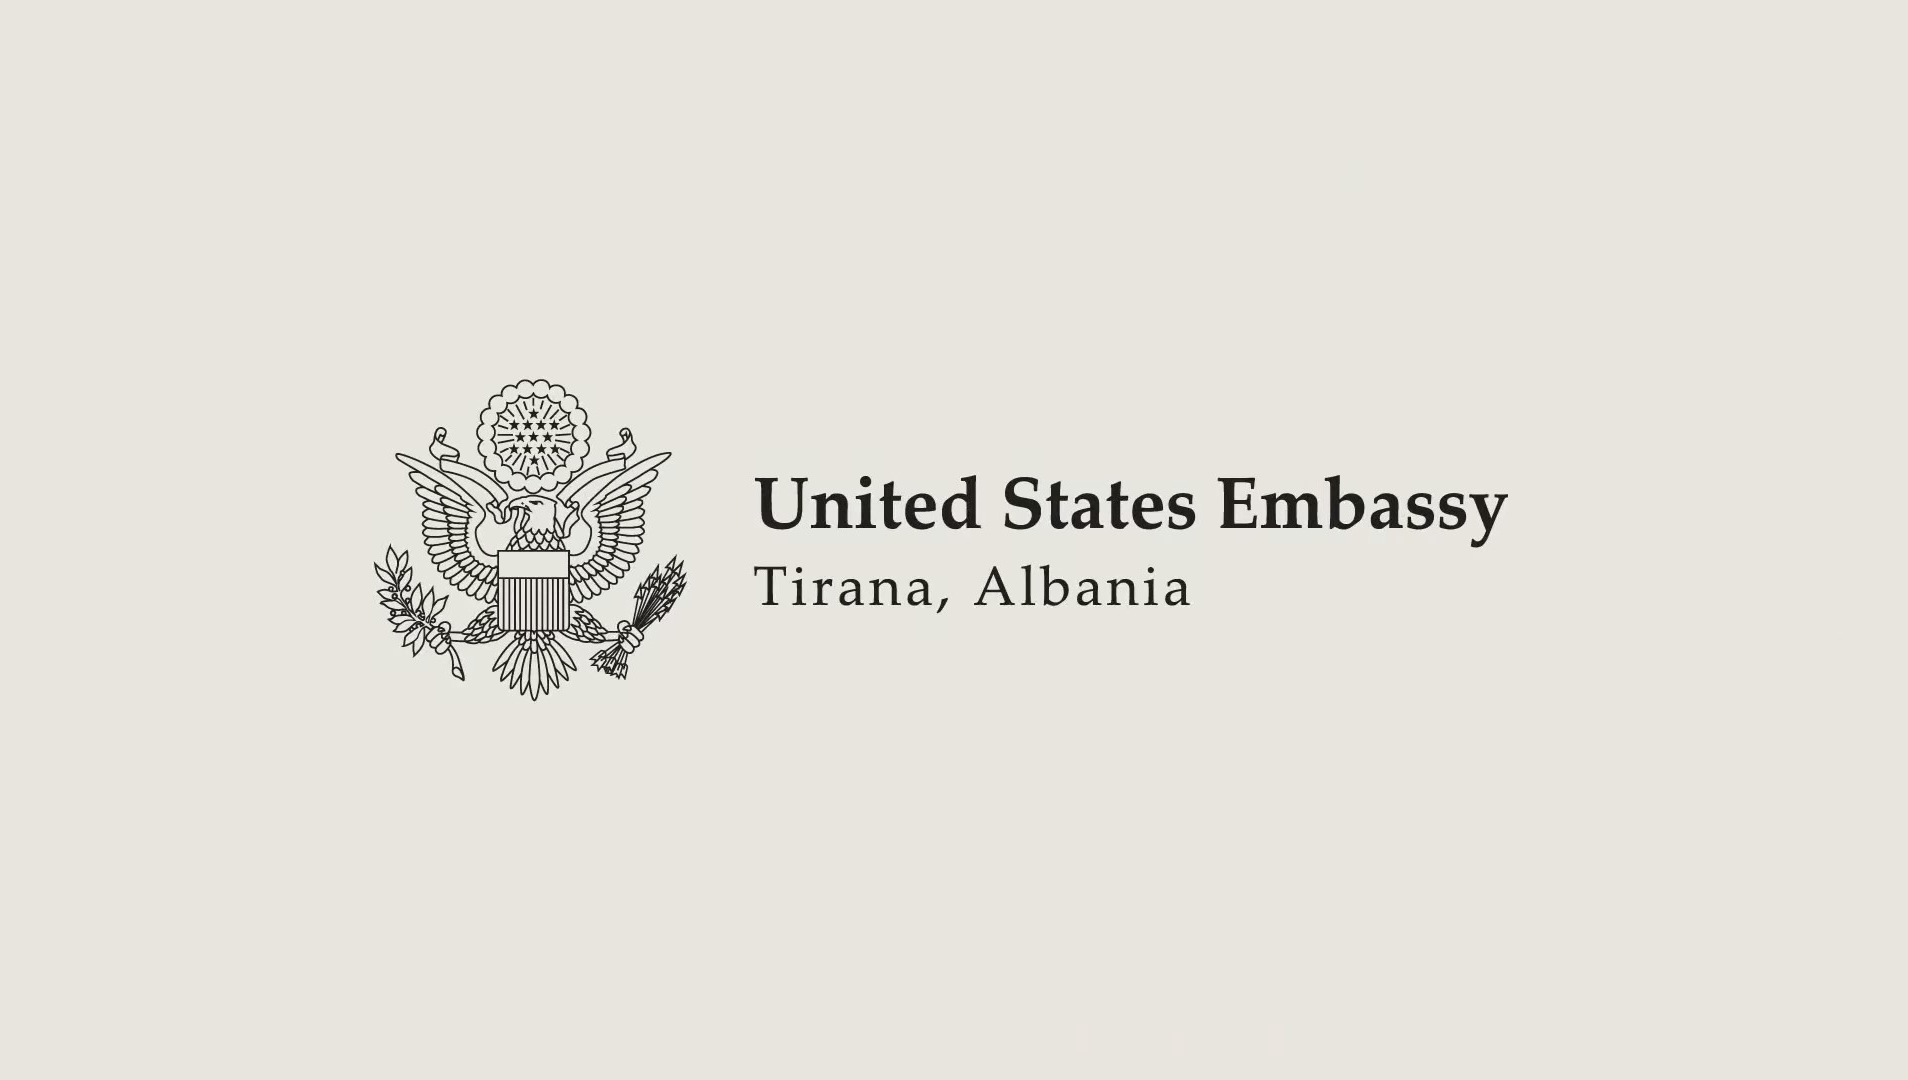 Ambasciata USA Tirana